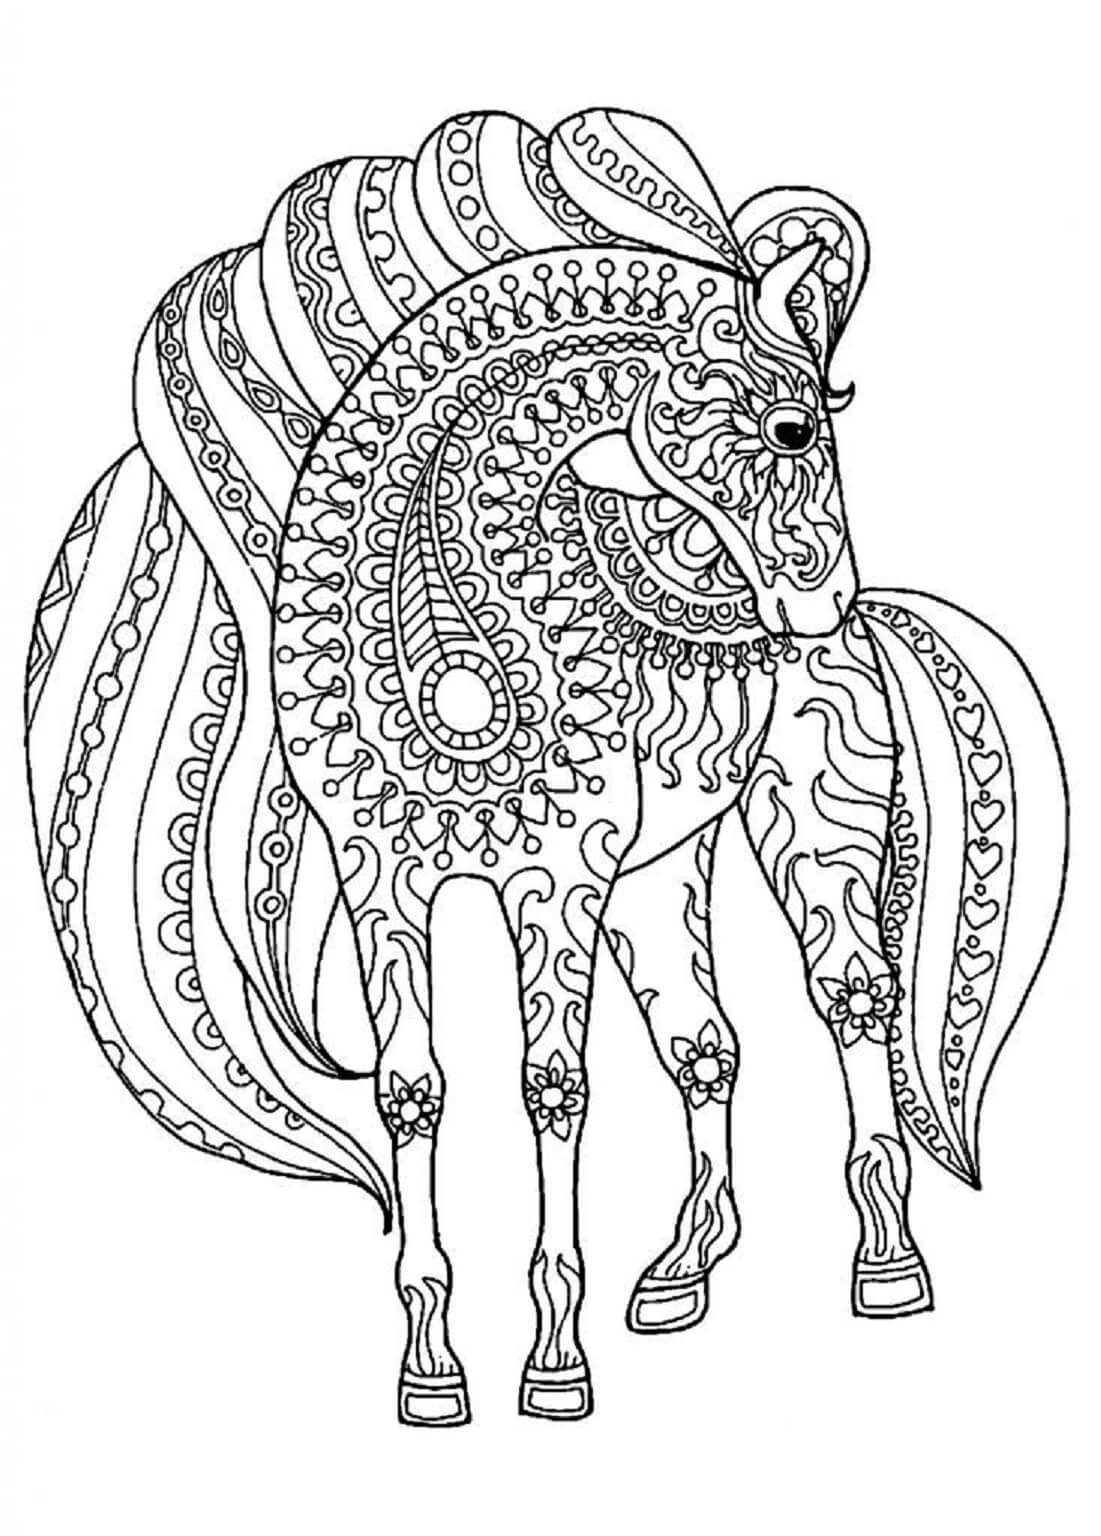 Horse mandala coloring pages